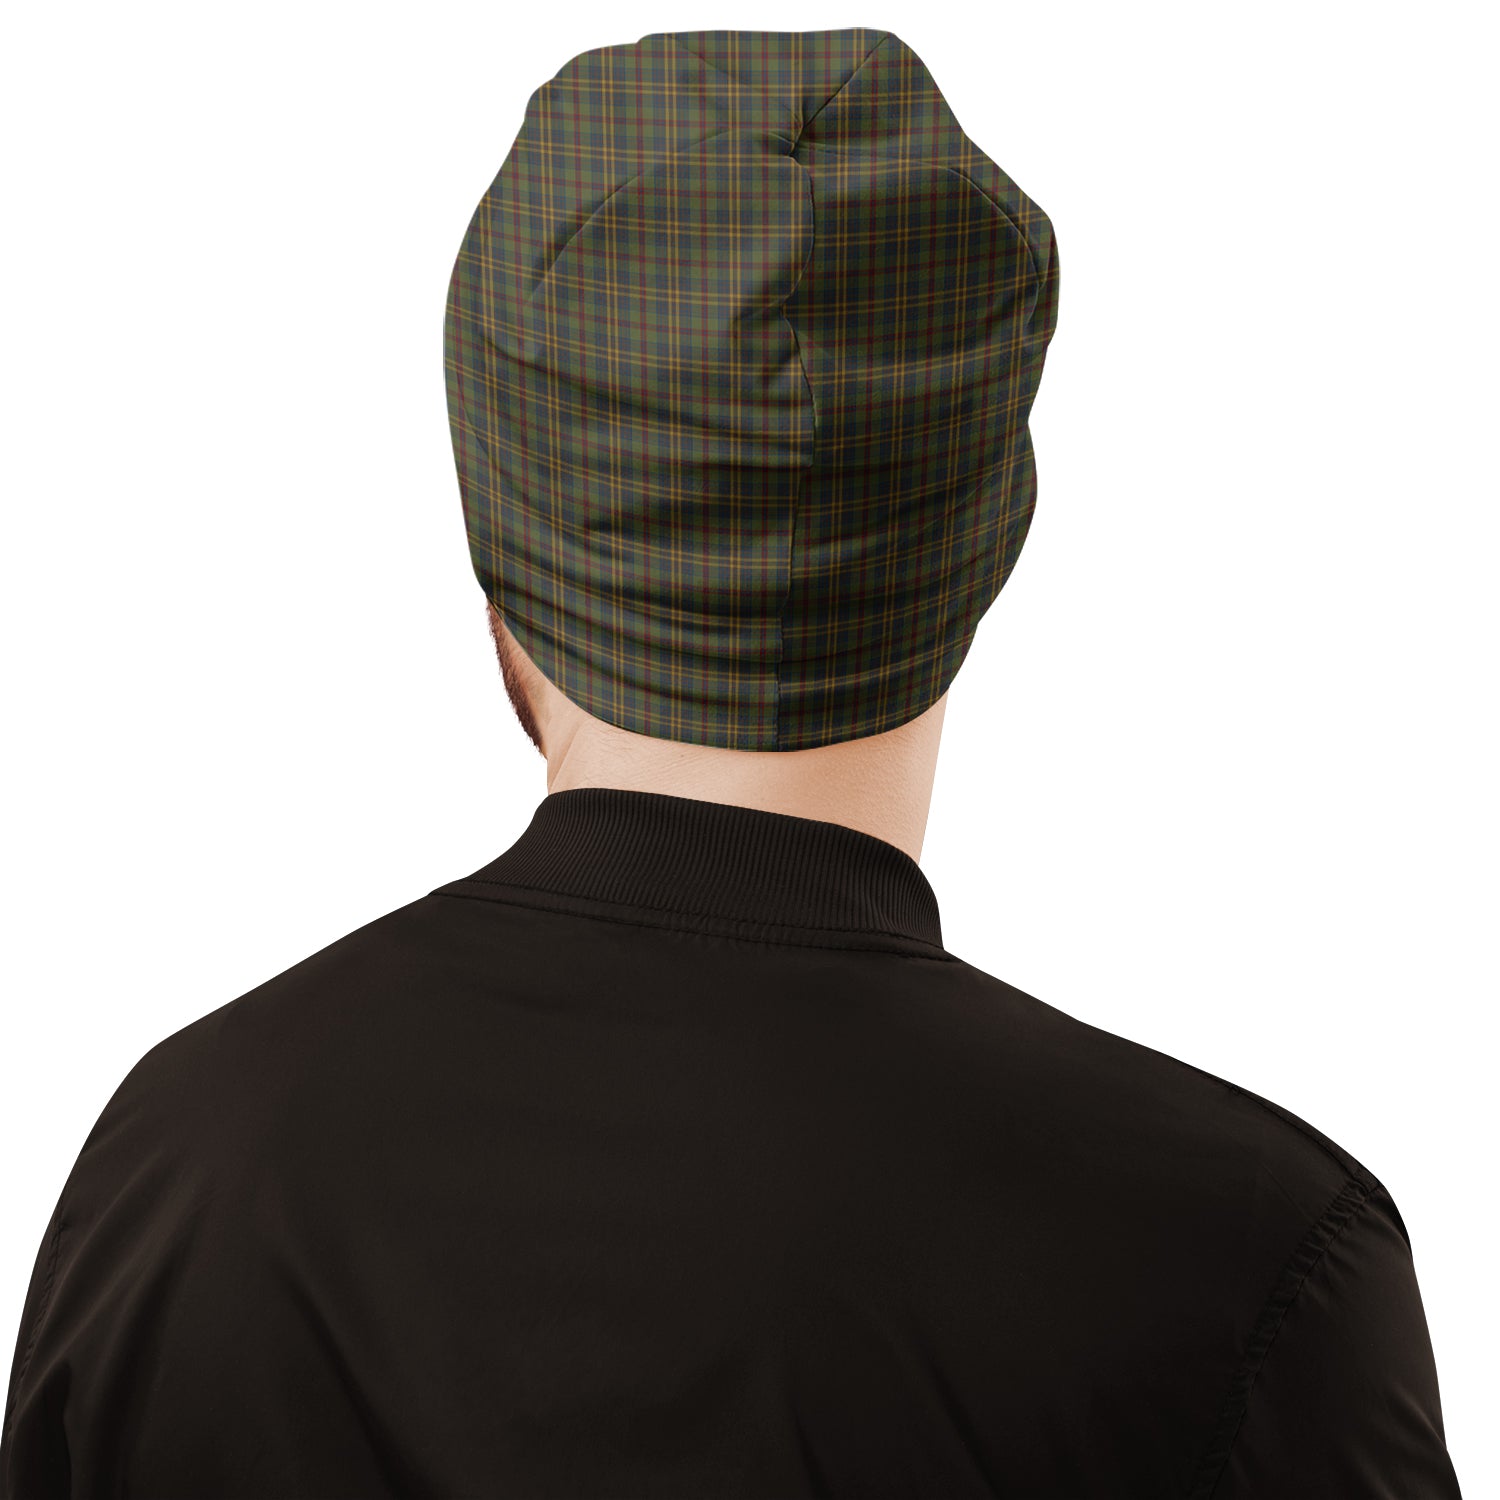 limerick-tartan-beanies-hat